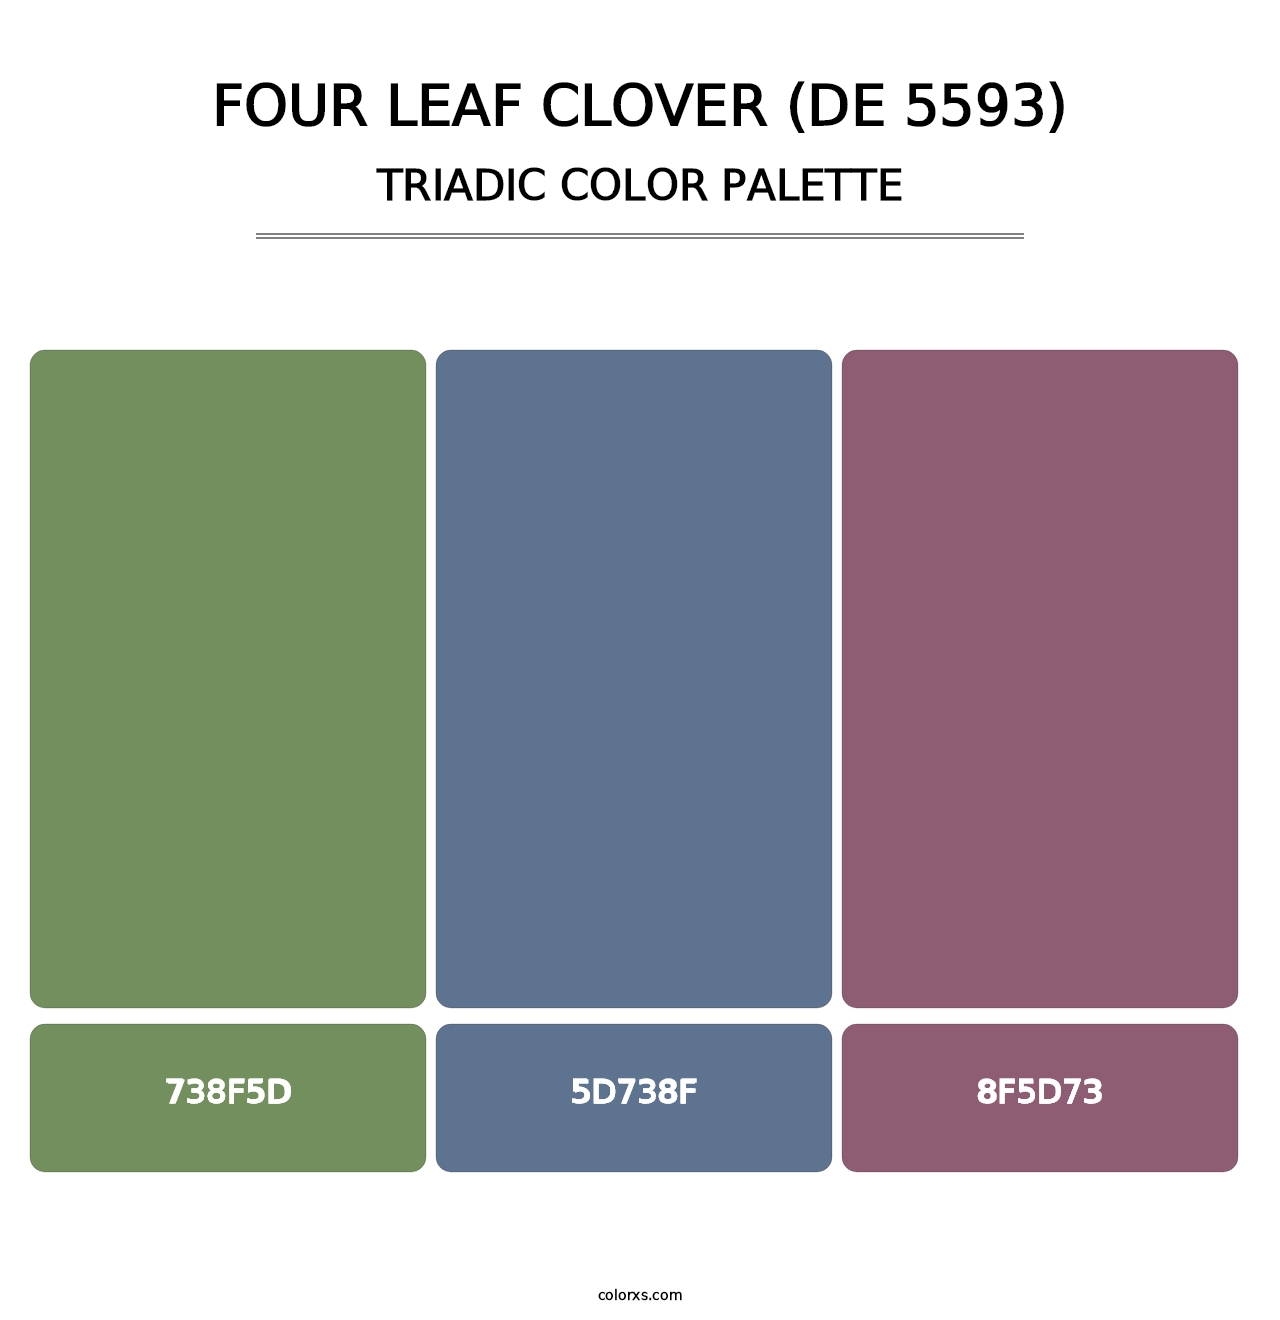 Four Leaf Clover (DE 5593) - Triadic Color Palette